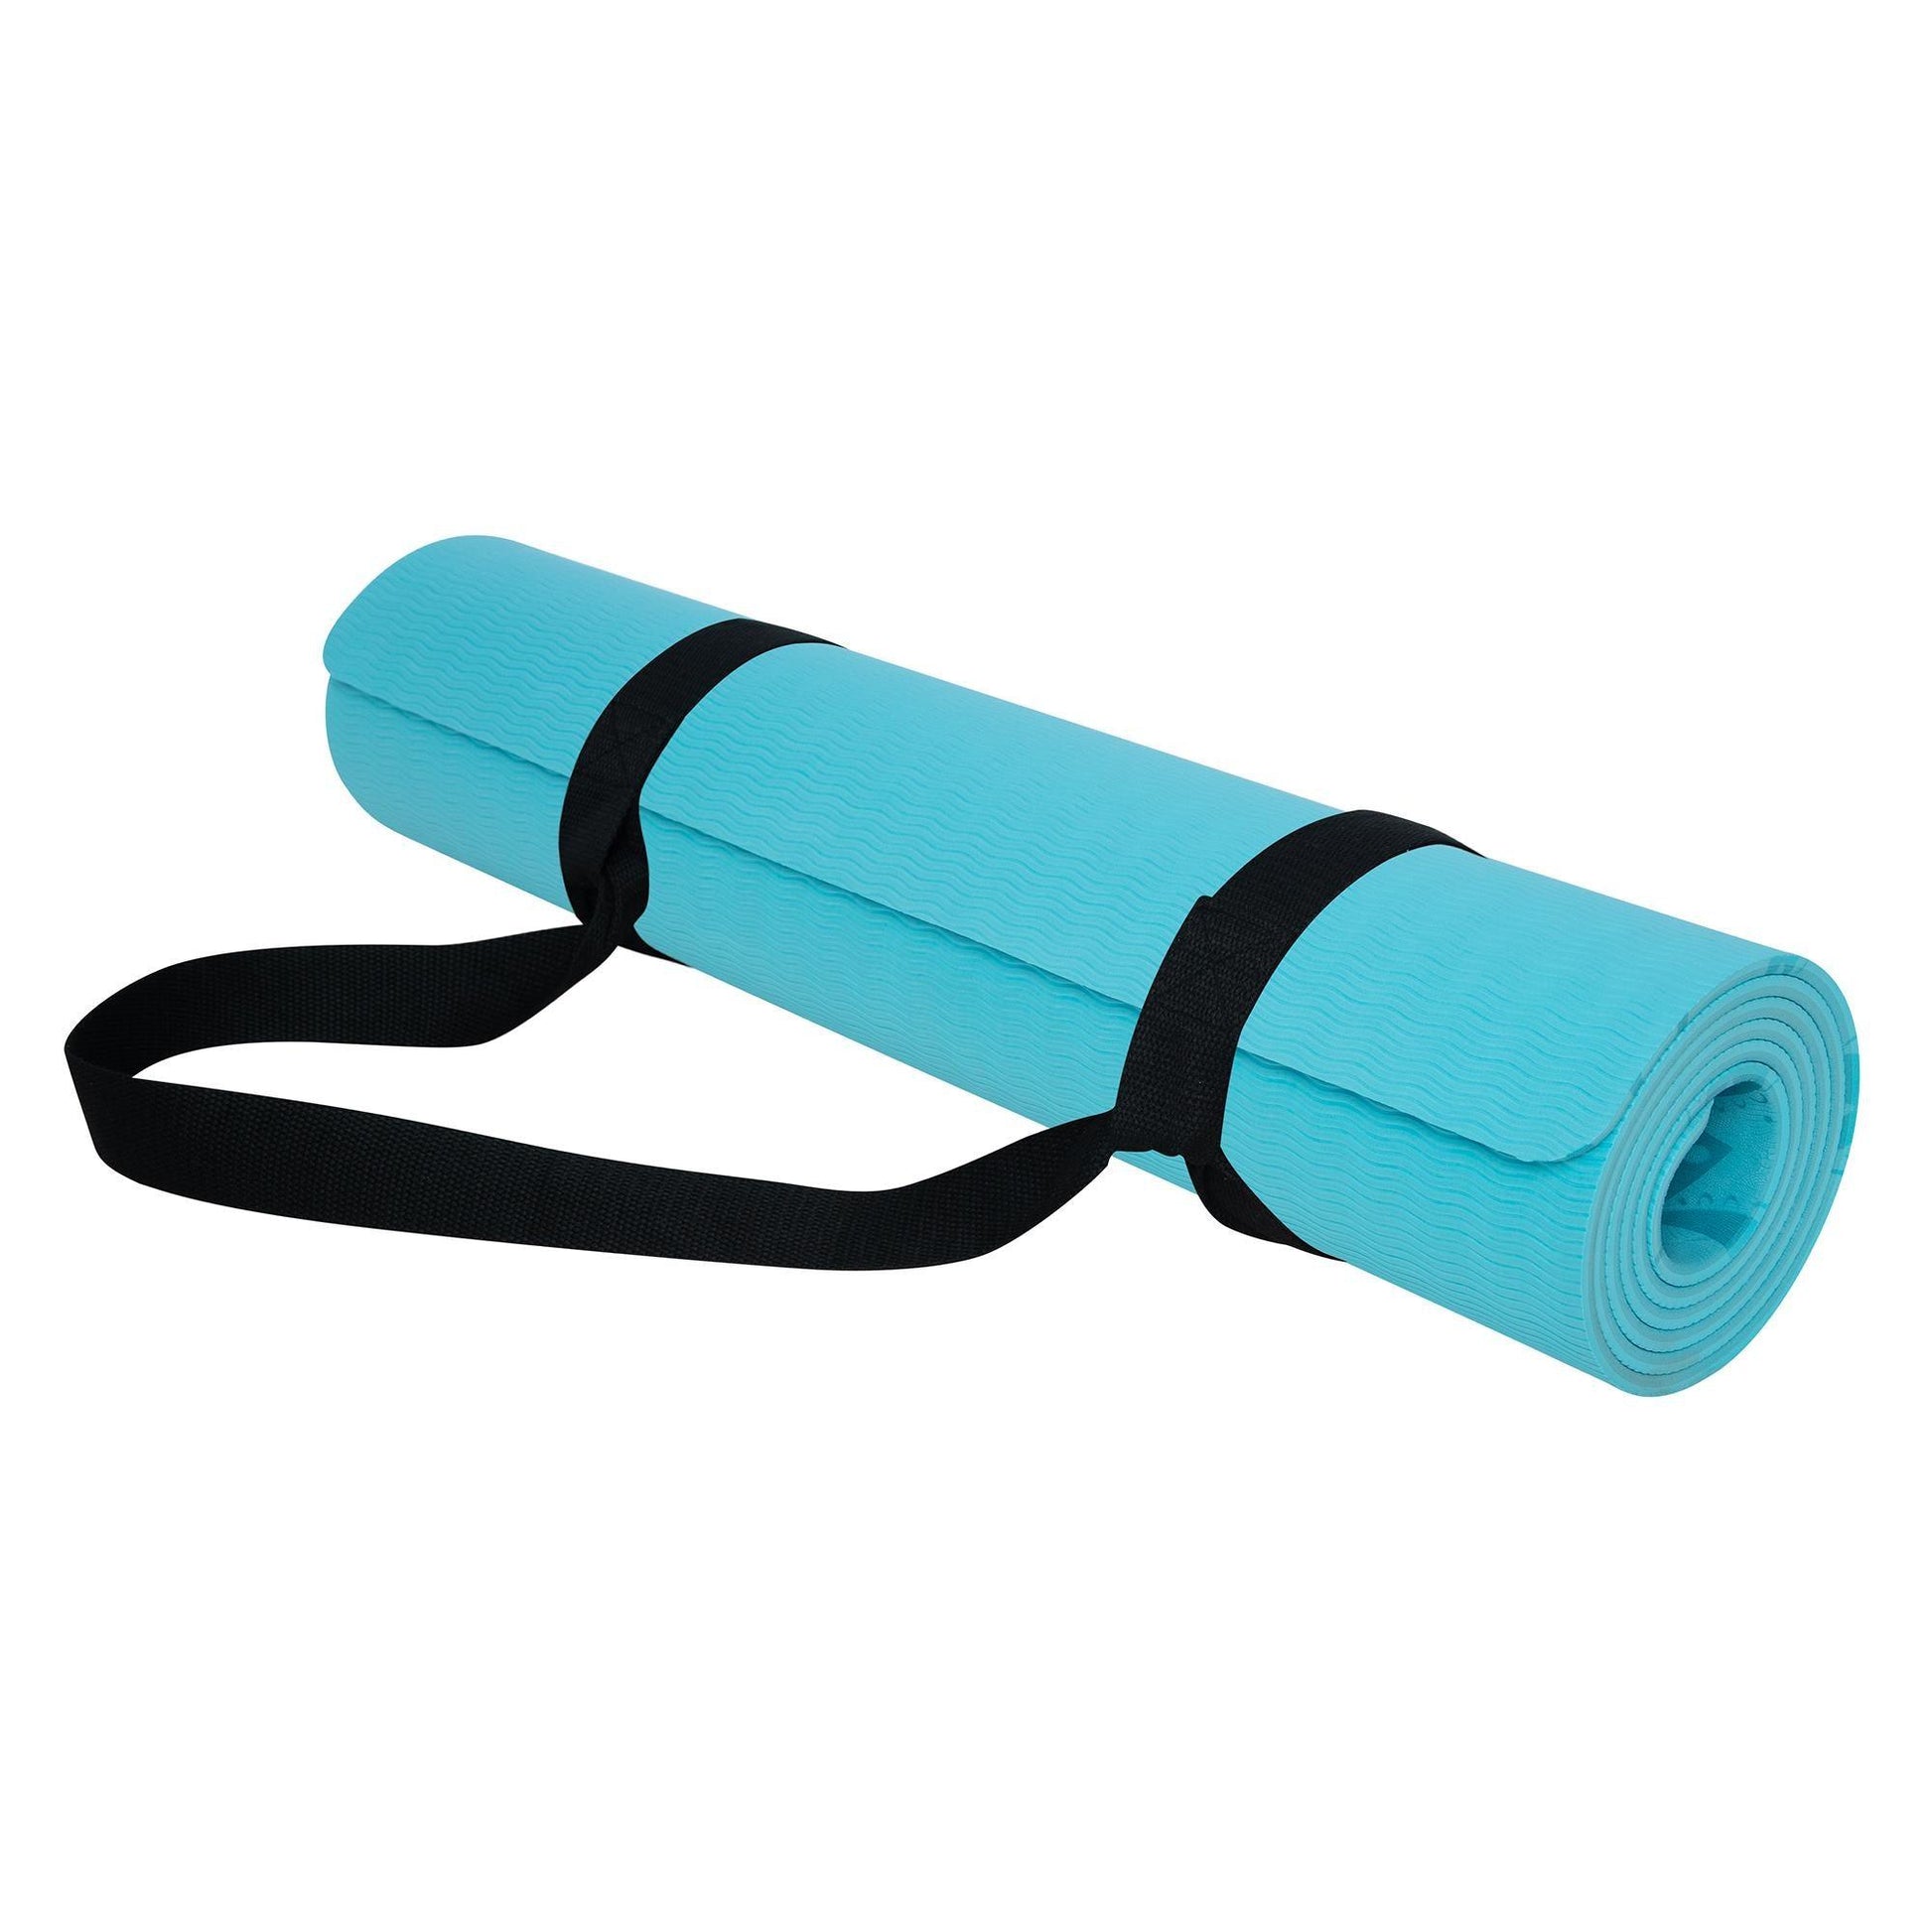 Yoga Mat Non - Slip & Lightweight Yoga Mat - Flow Yoga Mat - Aqua 6mm